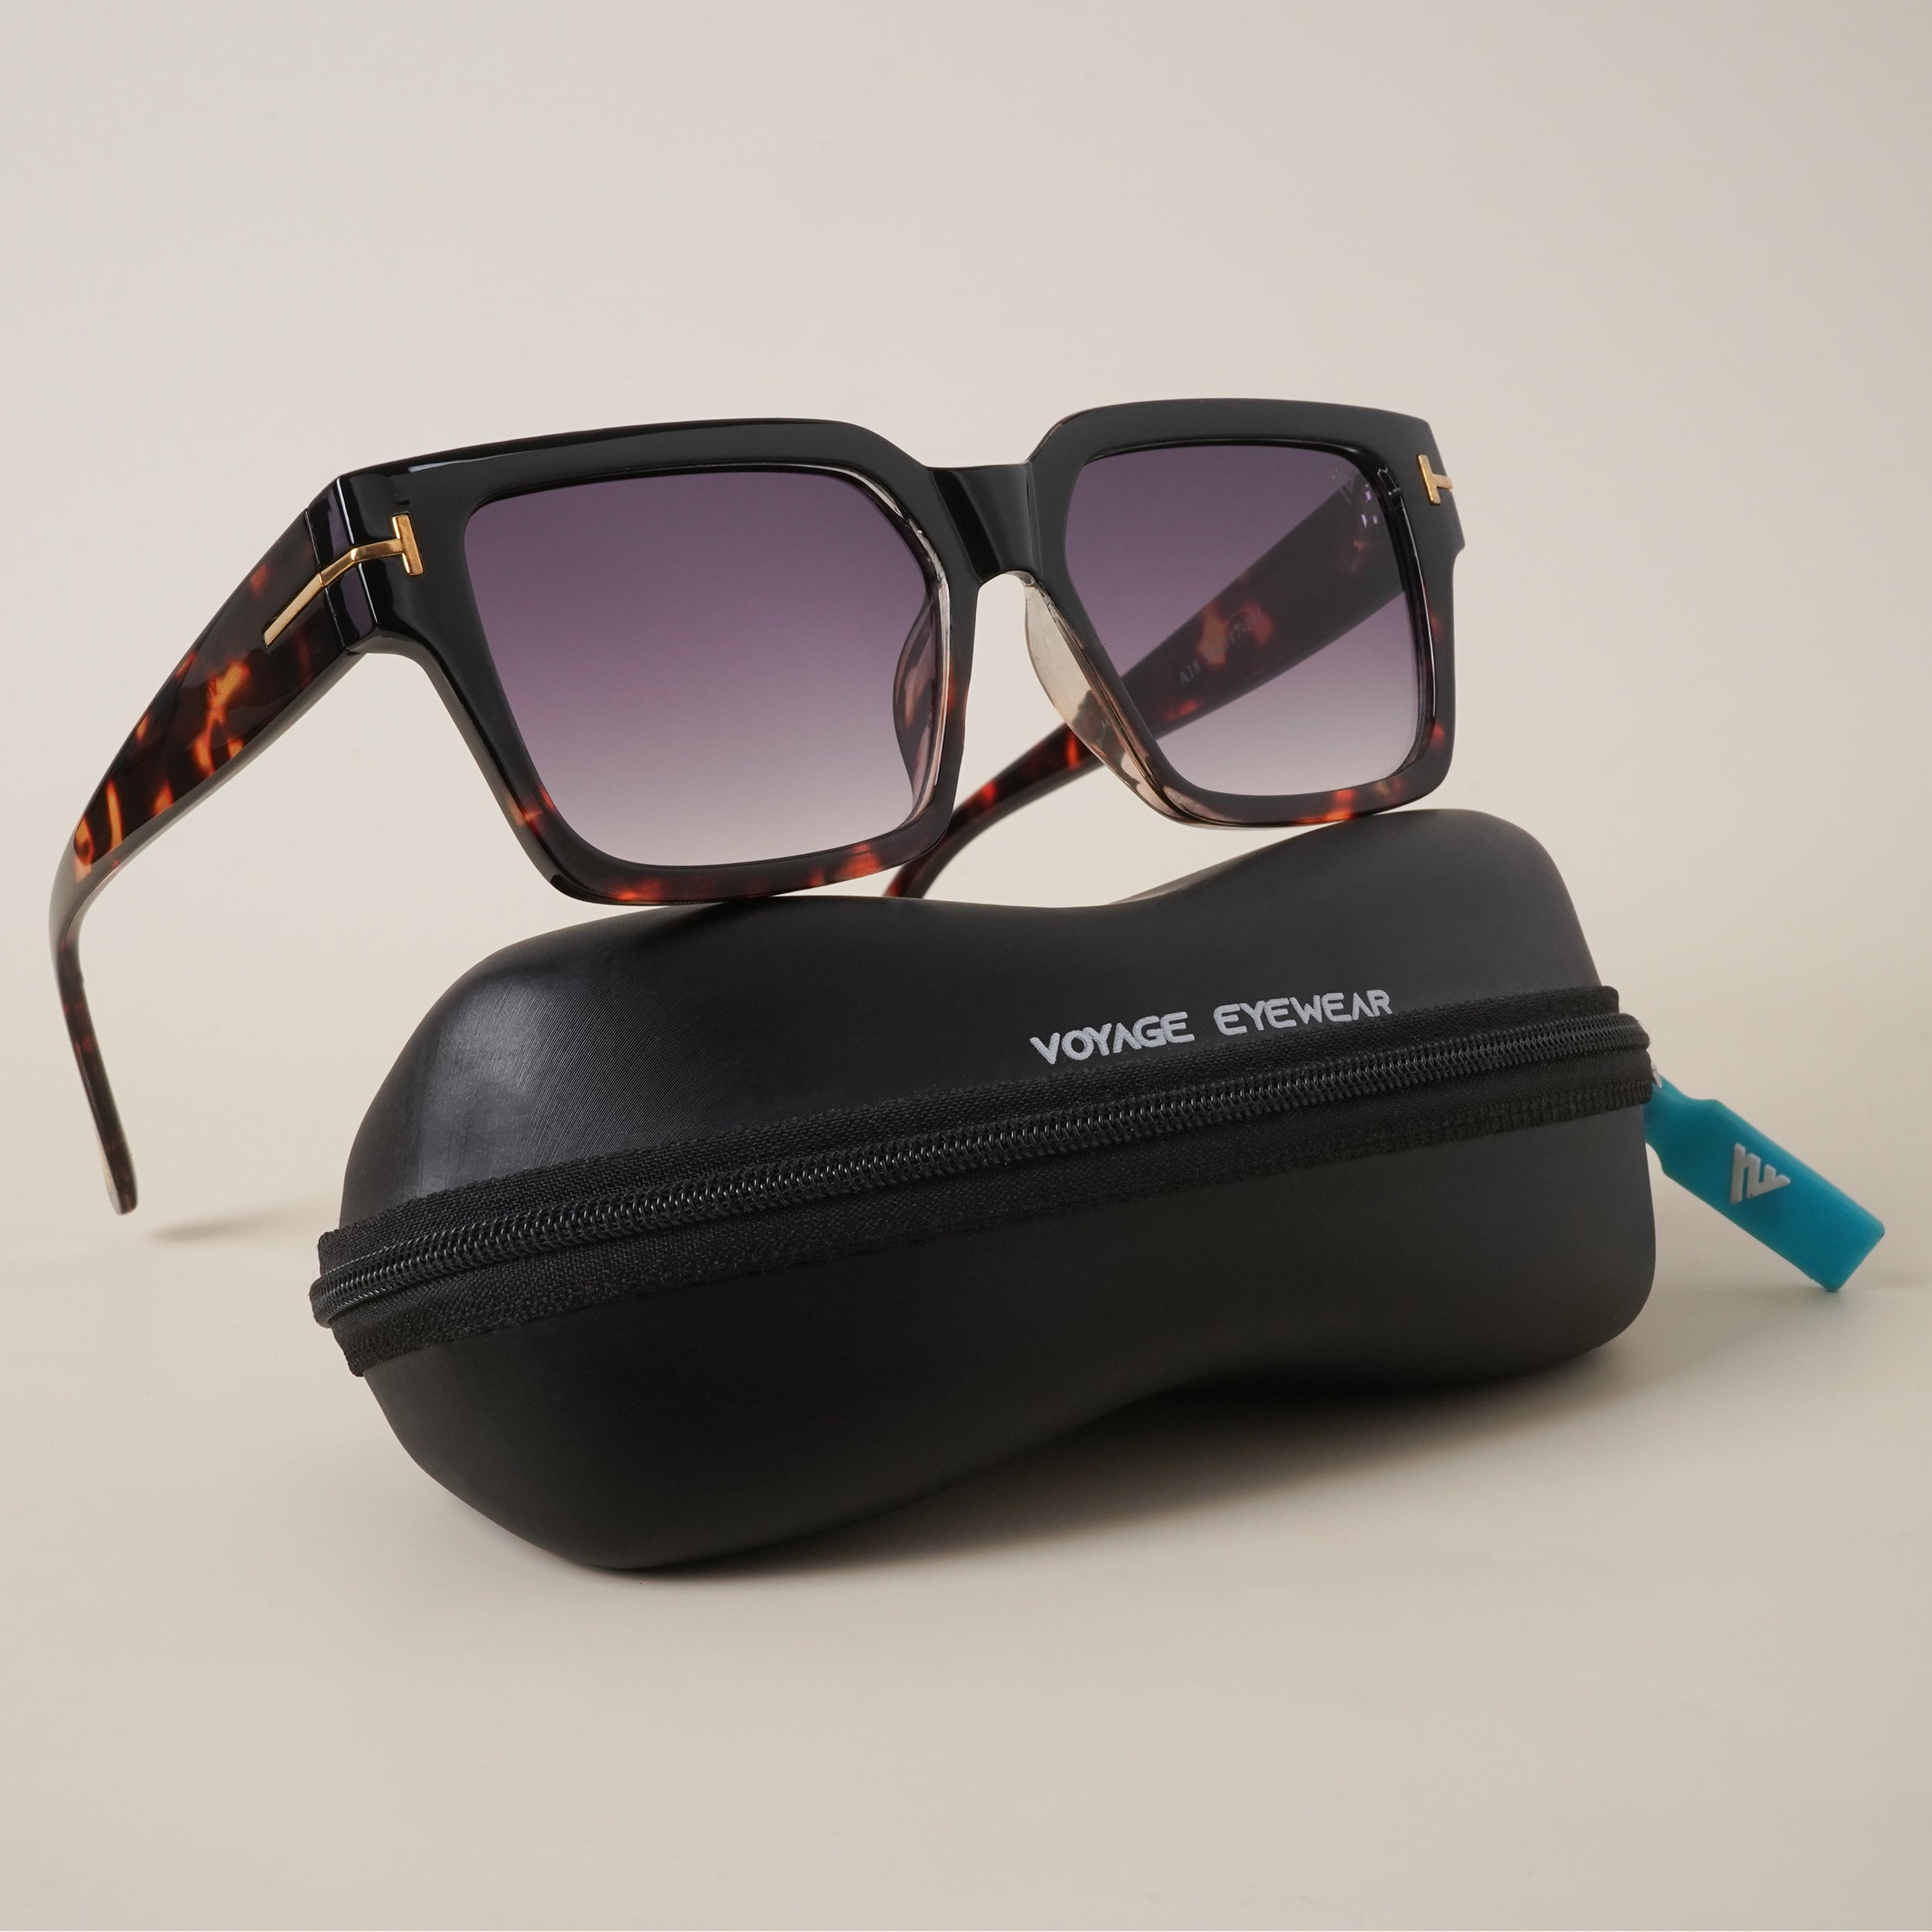 Voyage Black Wayfarer Sunglasses for Men & Women - MG3950